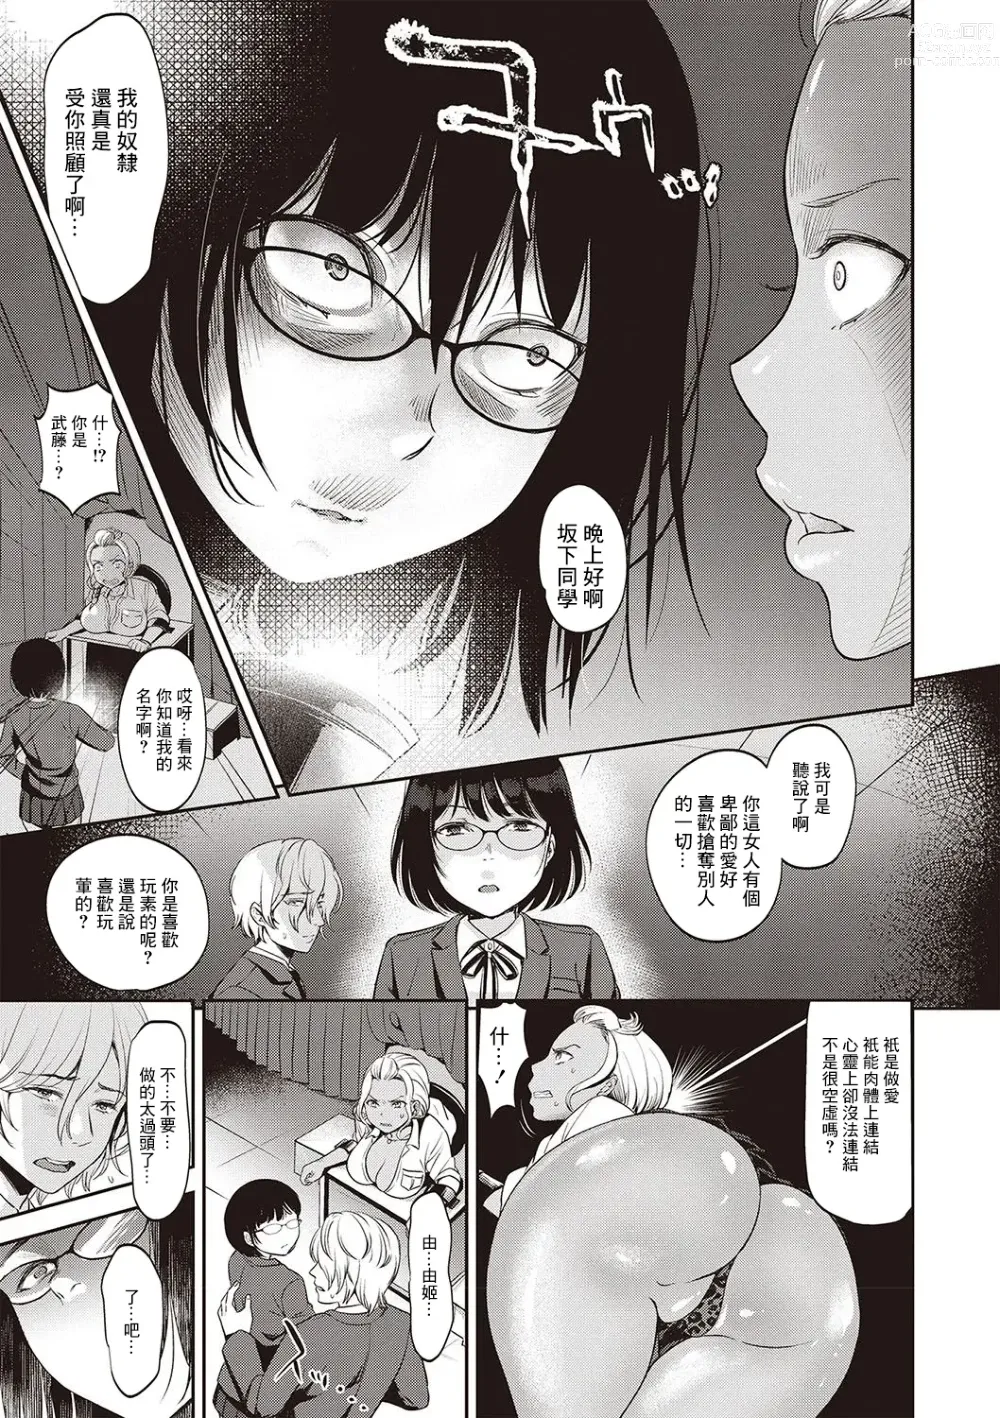 Page 5 of manga Black Hole